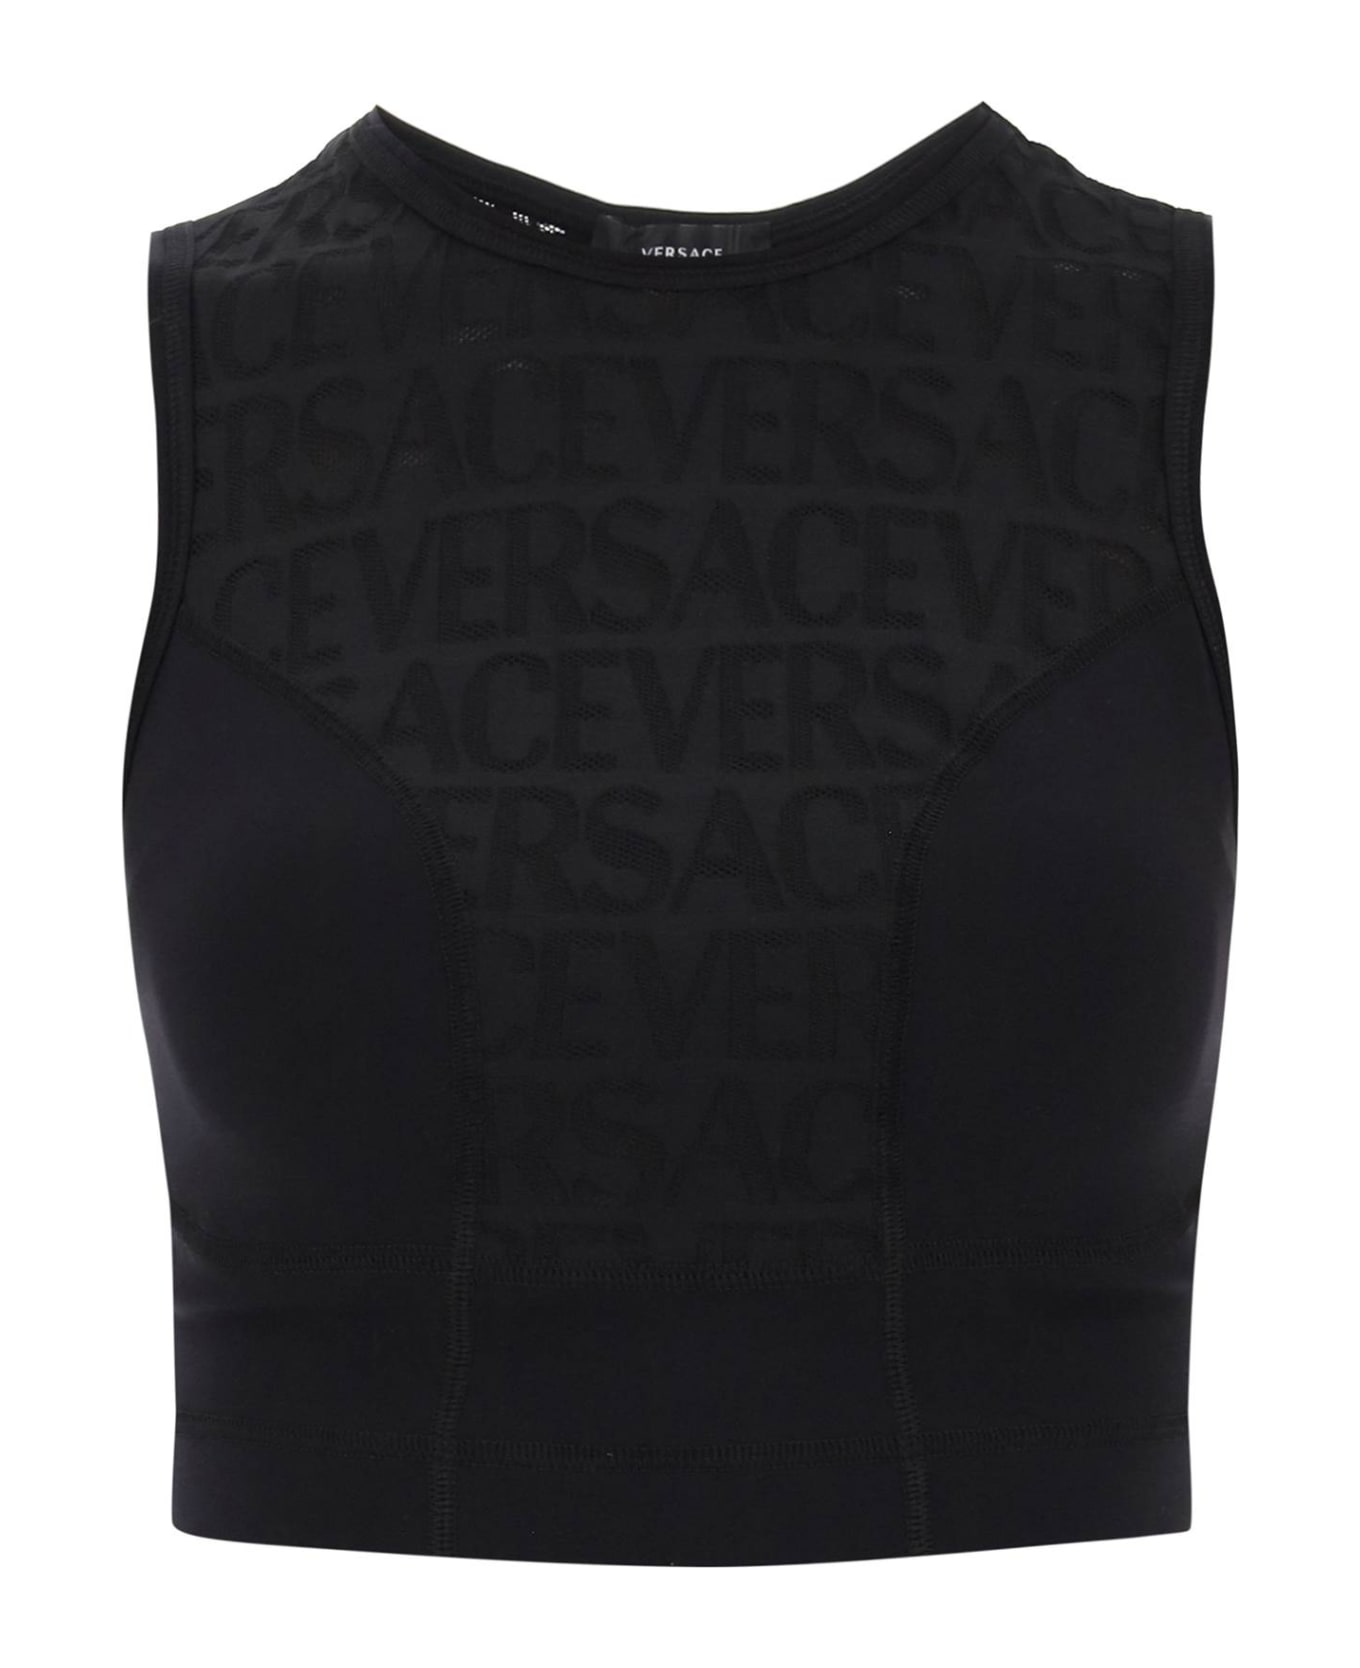 Versace Allover Bra Top - BLACK (Black)